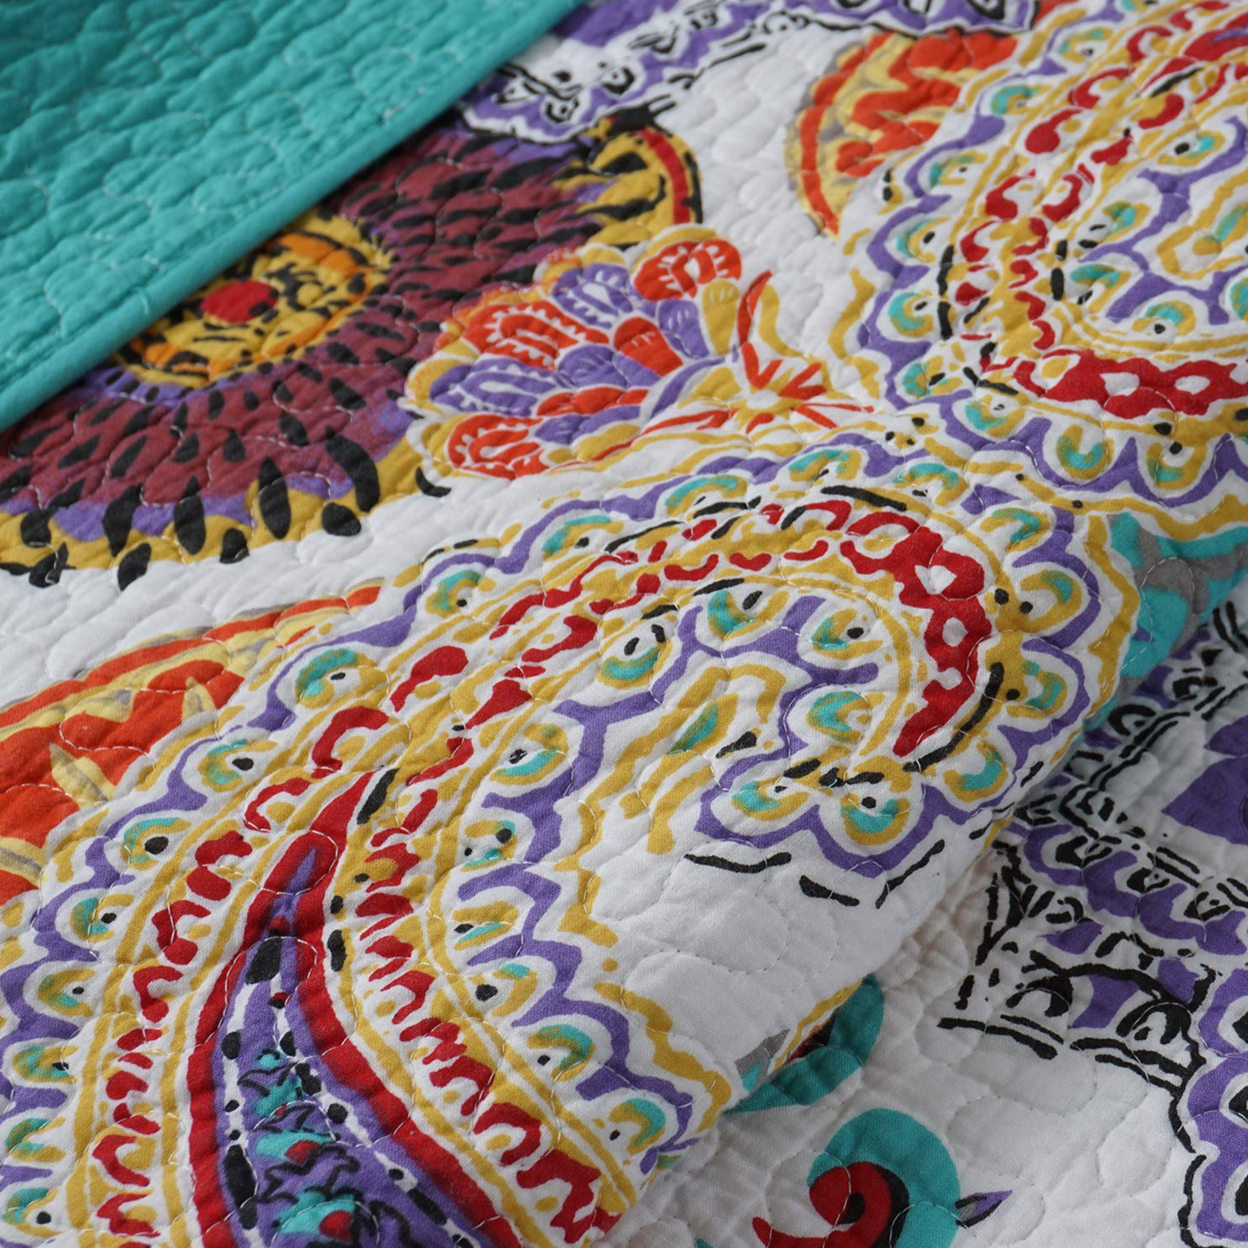 3 Piece Queen Size Cotton Quilt Set With Paisley Print, Teal Blue- Saltoro Sherpi